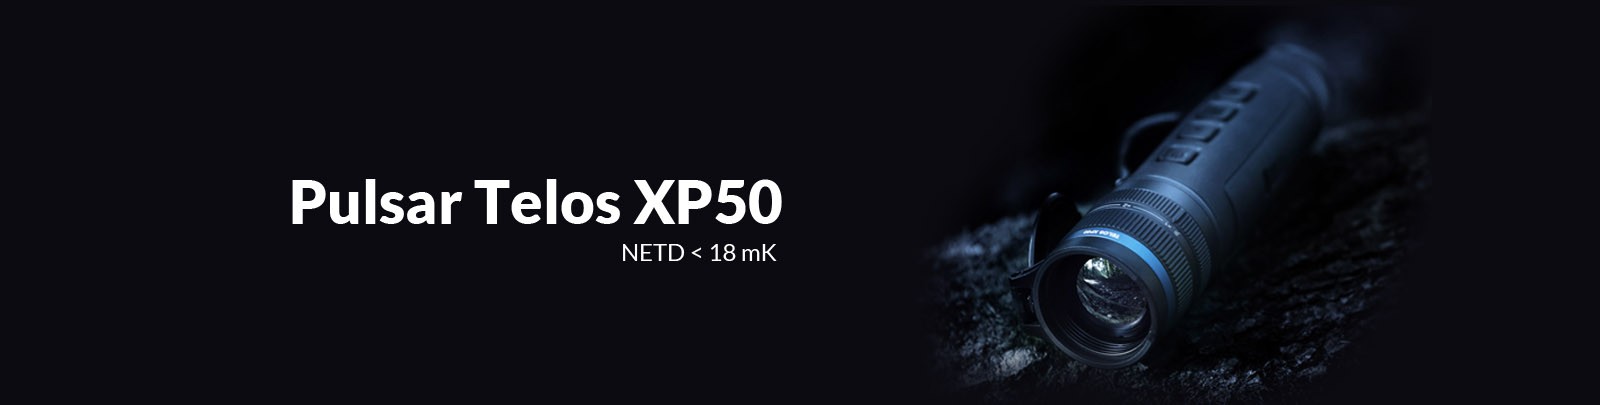 Pulsar Telos XP50 opis